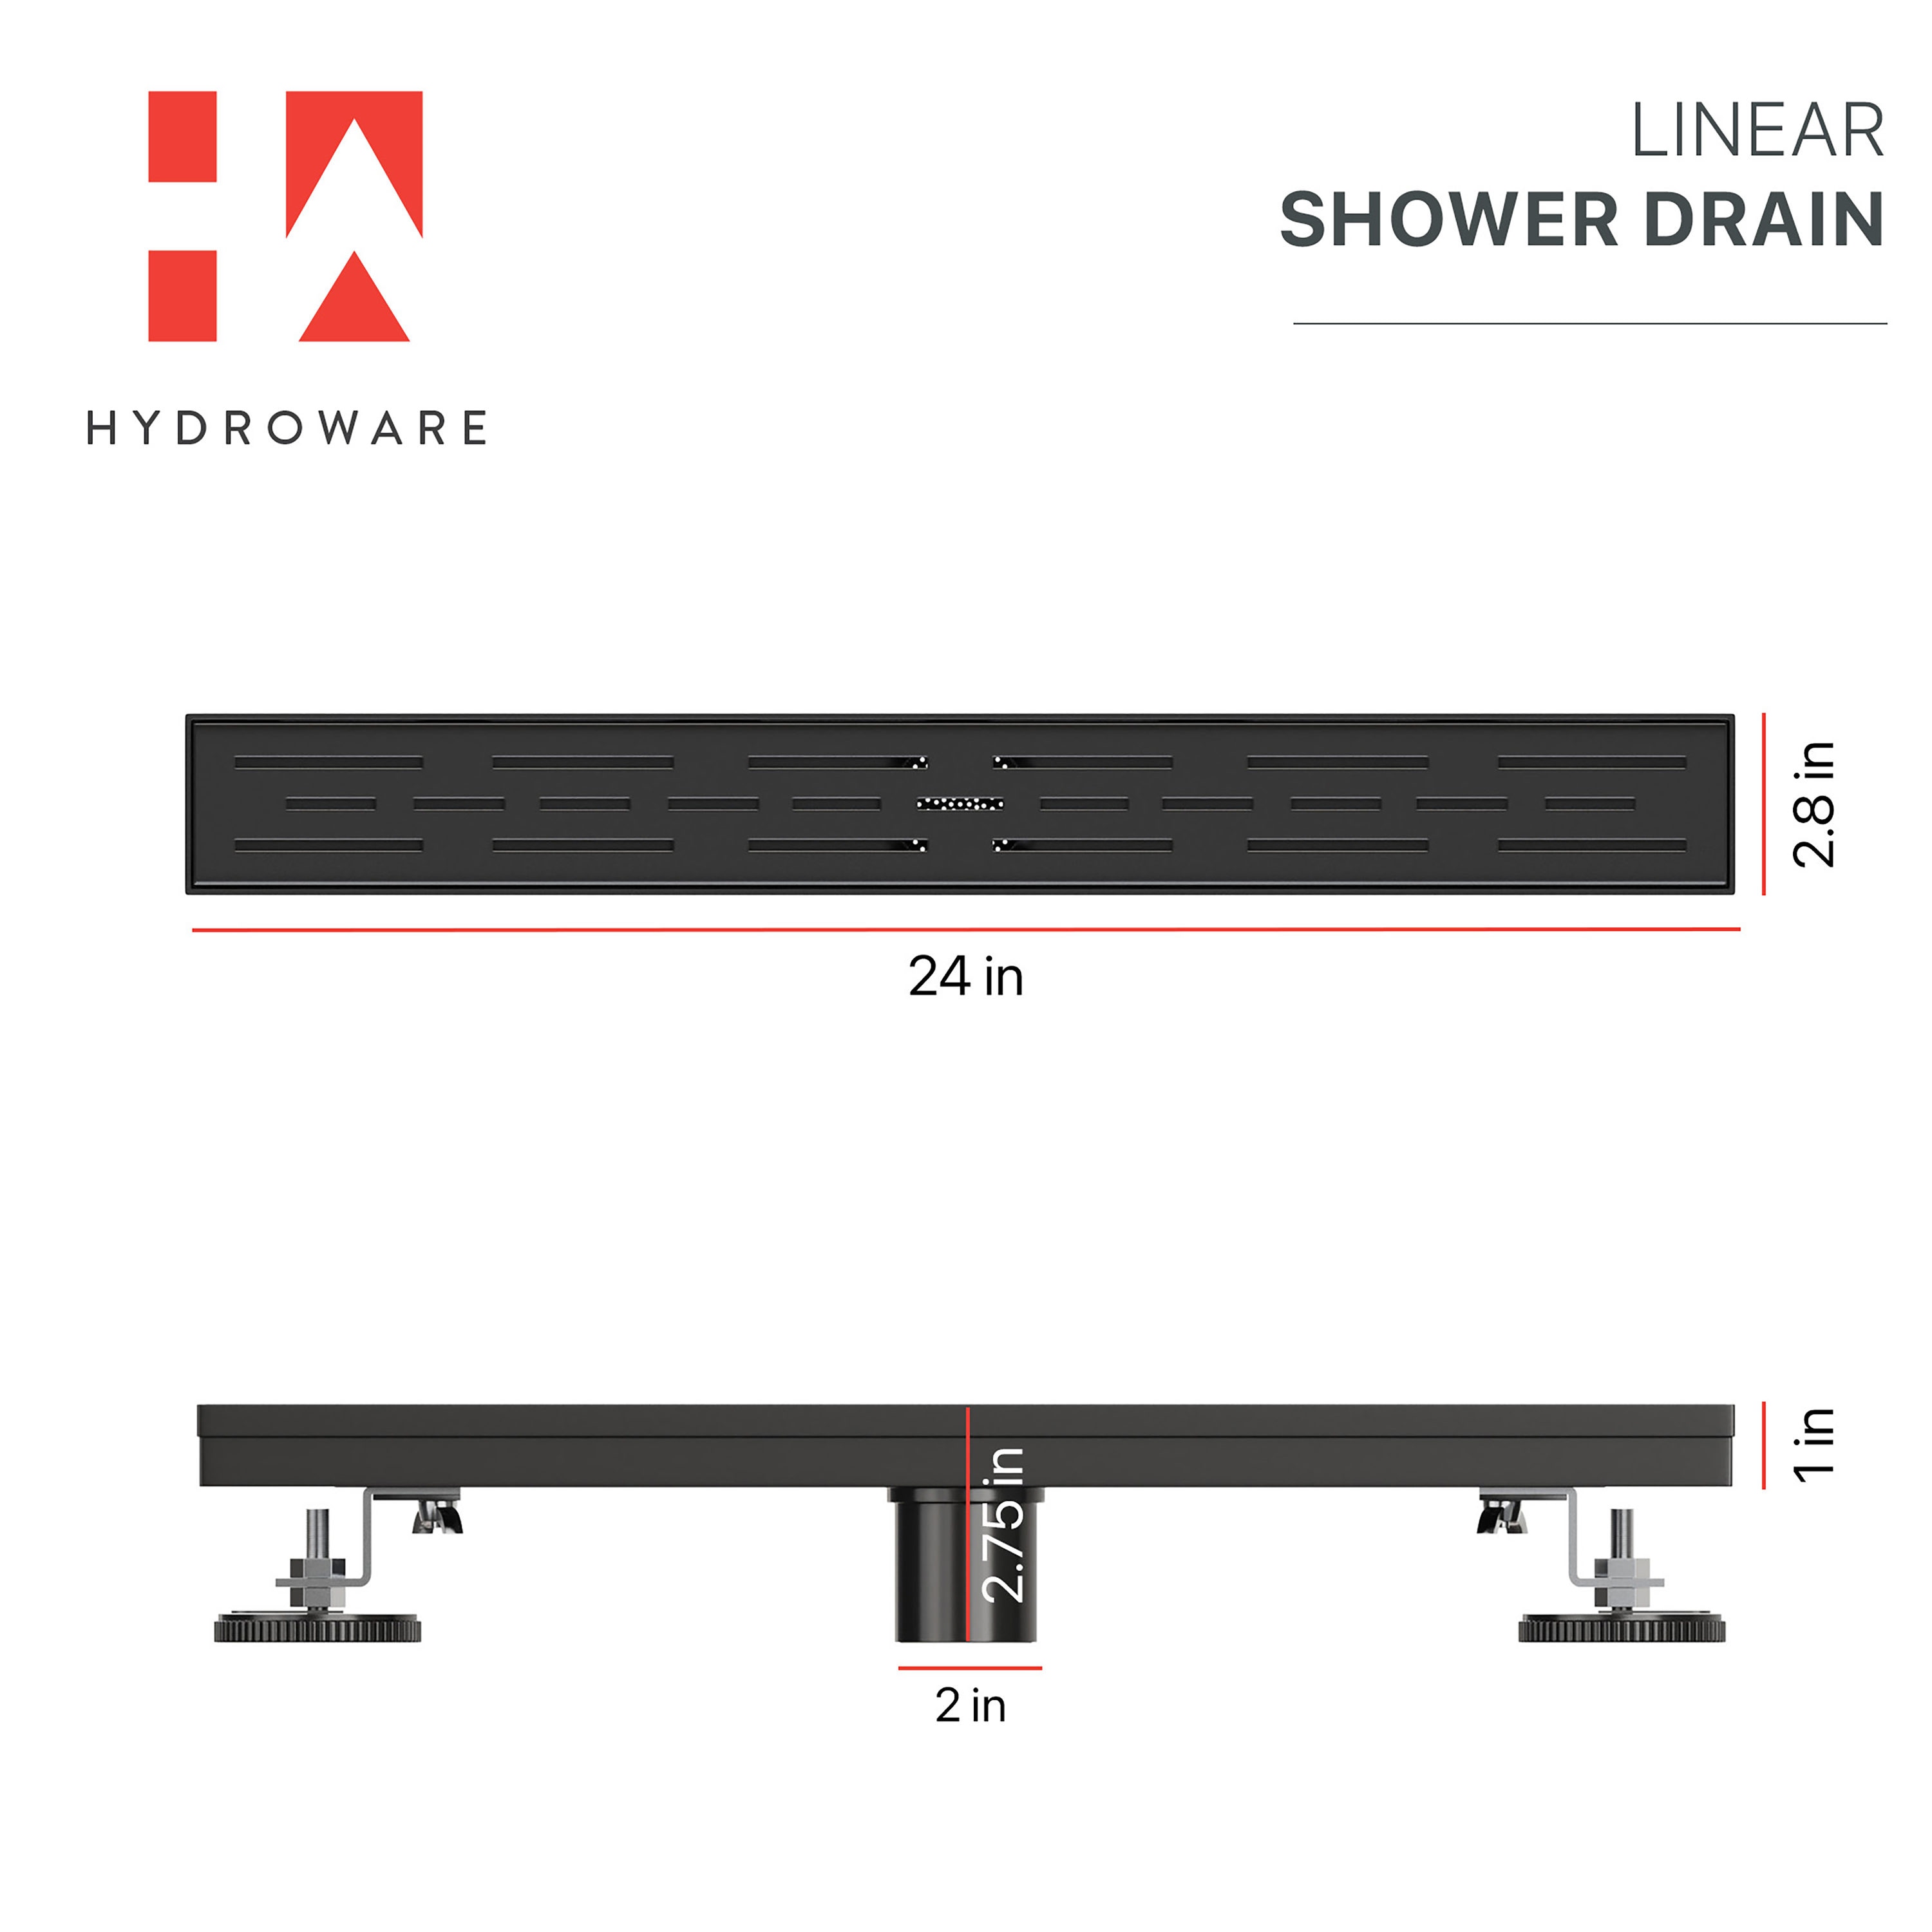 HYDROWARE HYD-0007 24 Linear Grid Shower Drain Finish: Matte Black